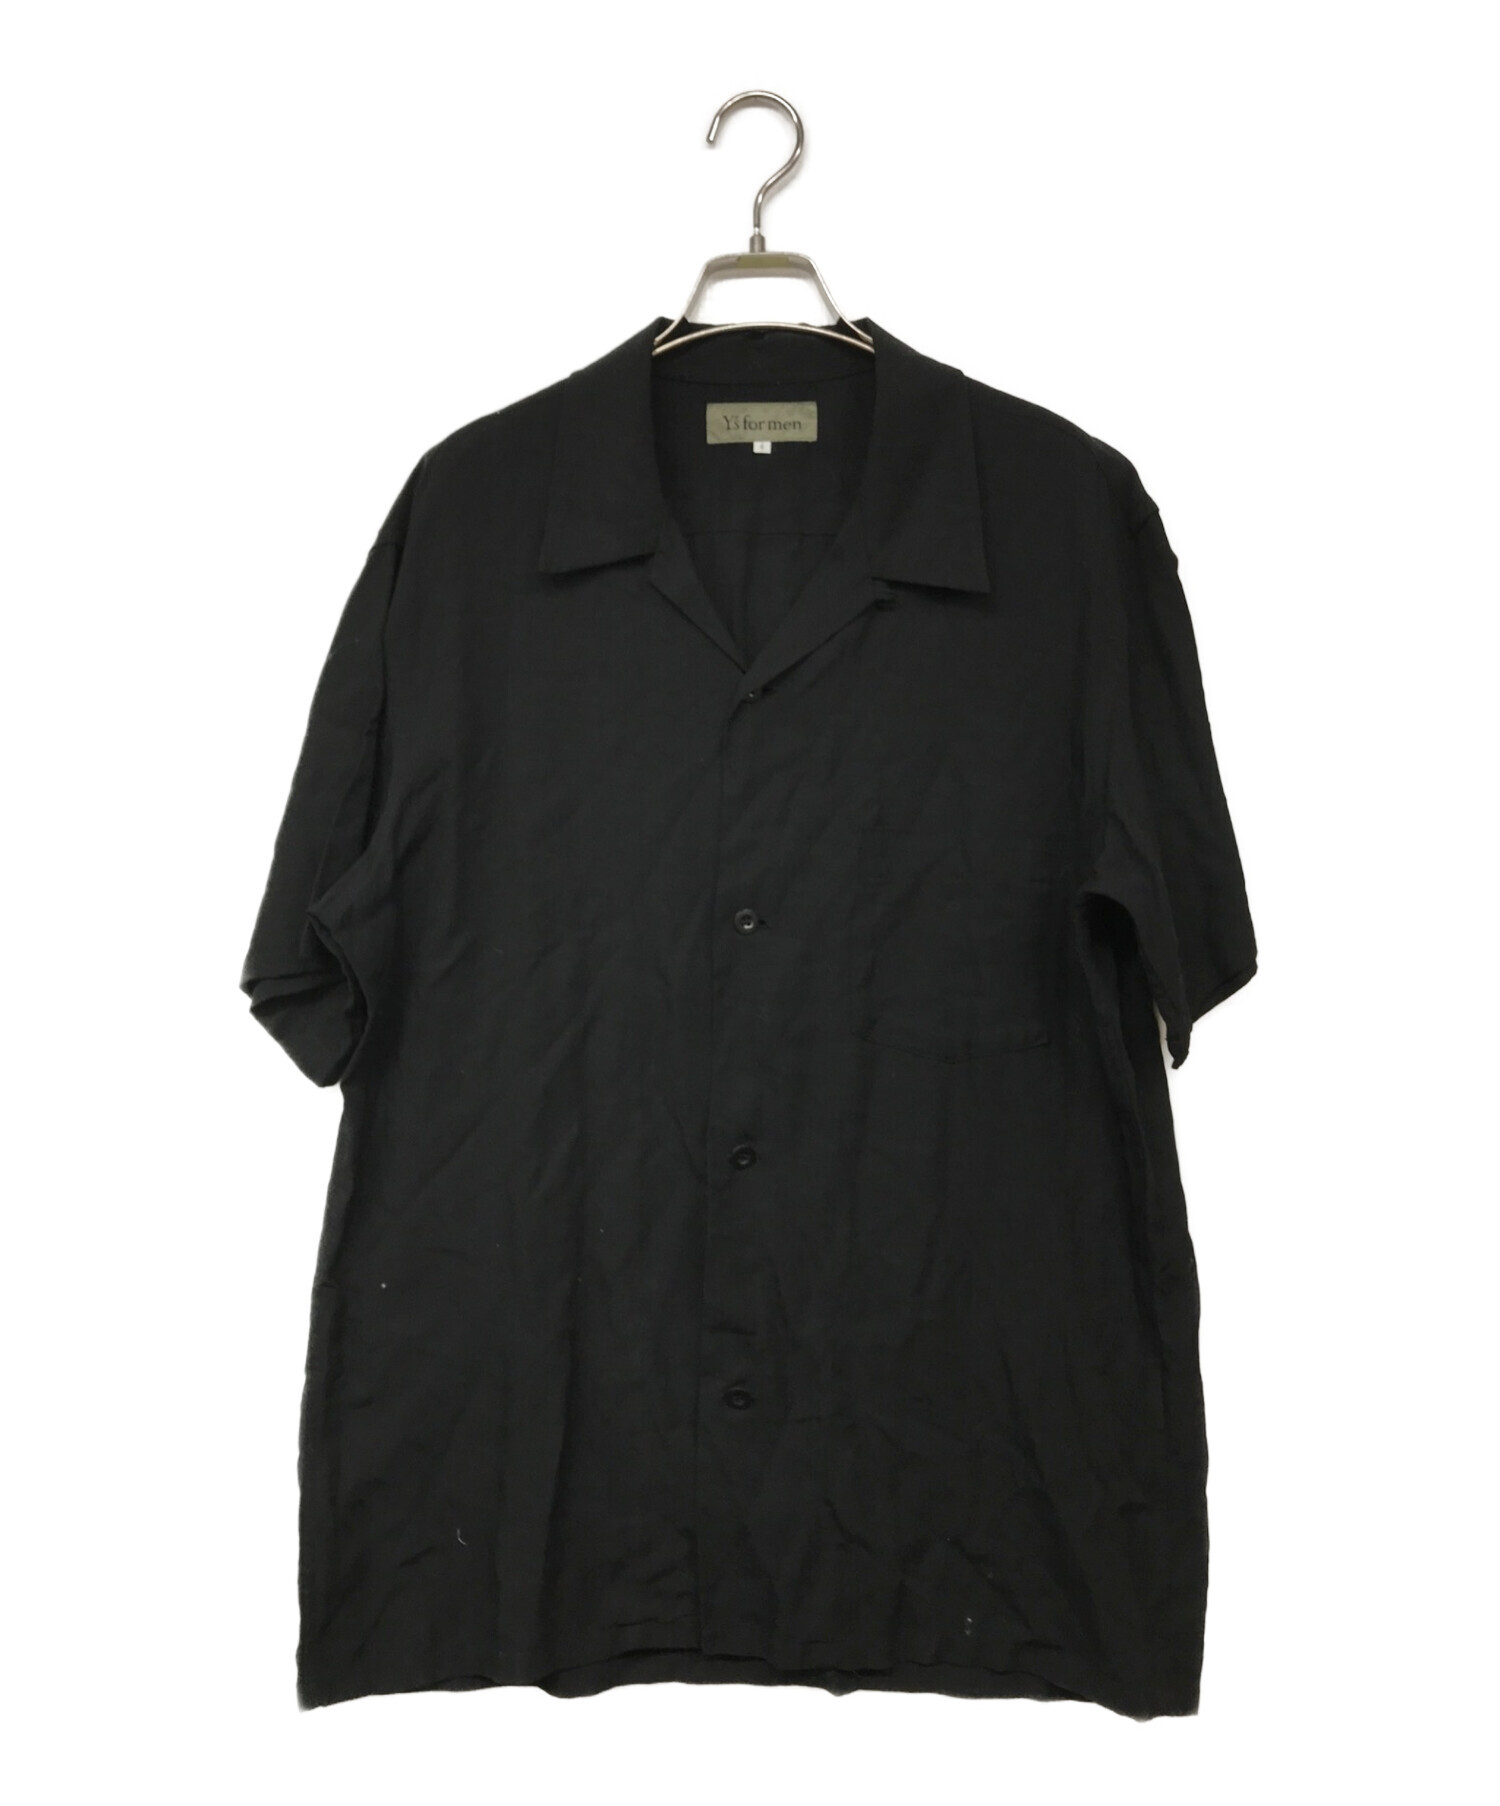 Y's for men (ワイズフォーメン) オープンカラーシャツ ブラック サイズ:4